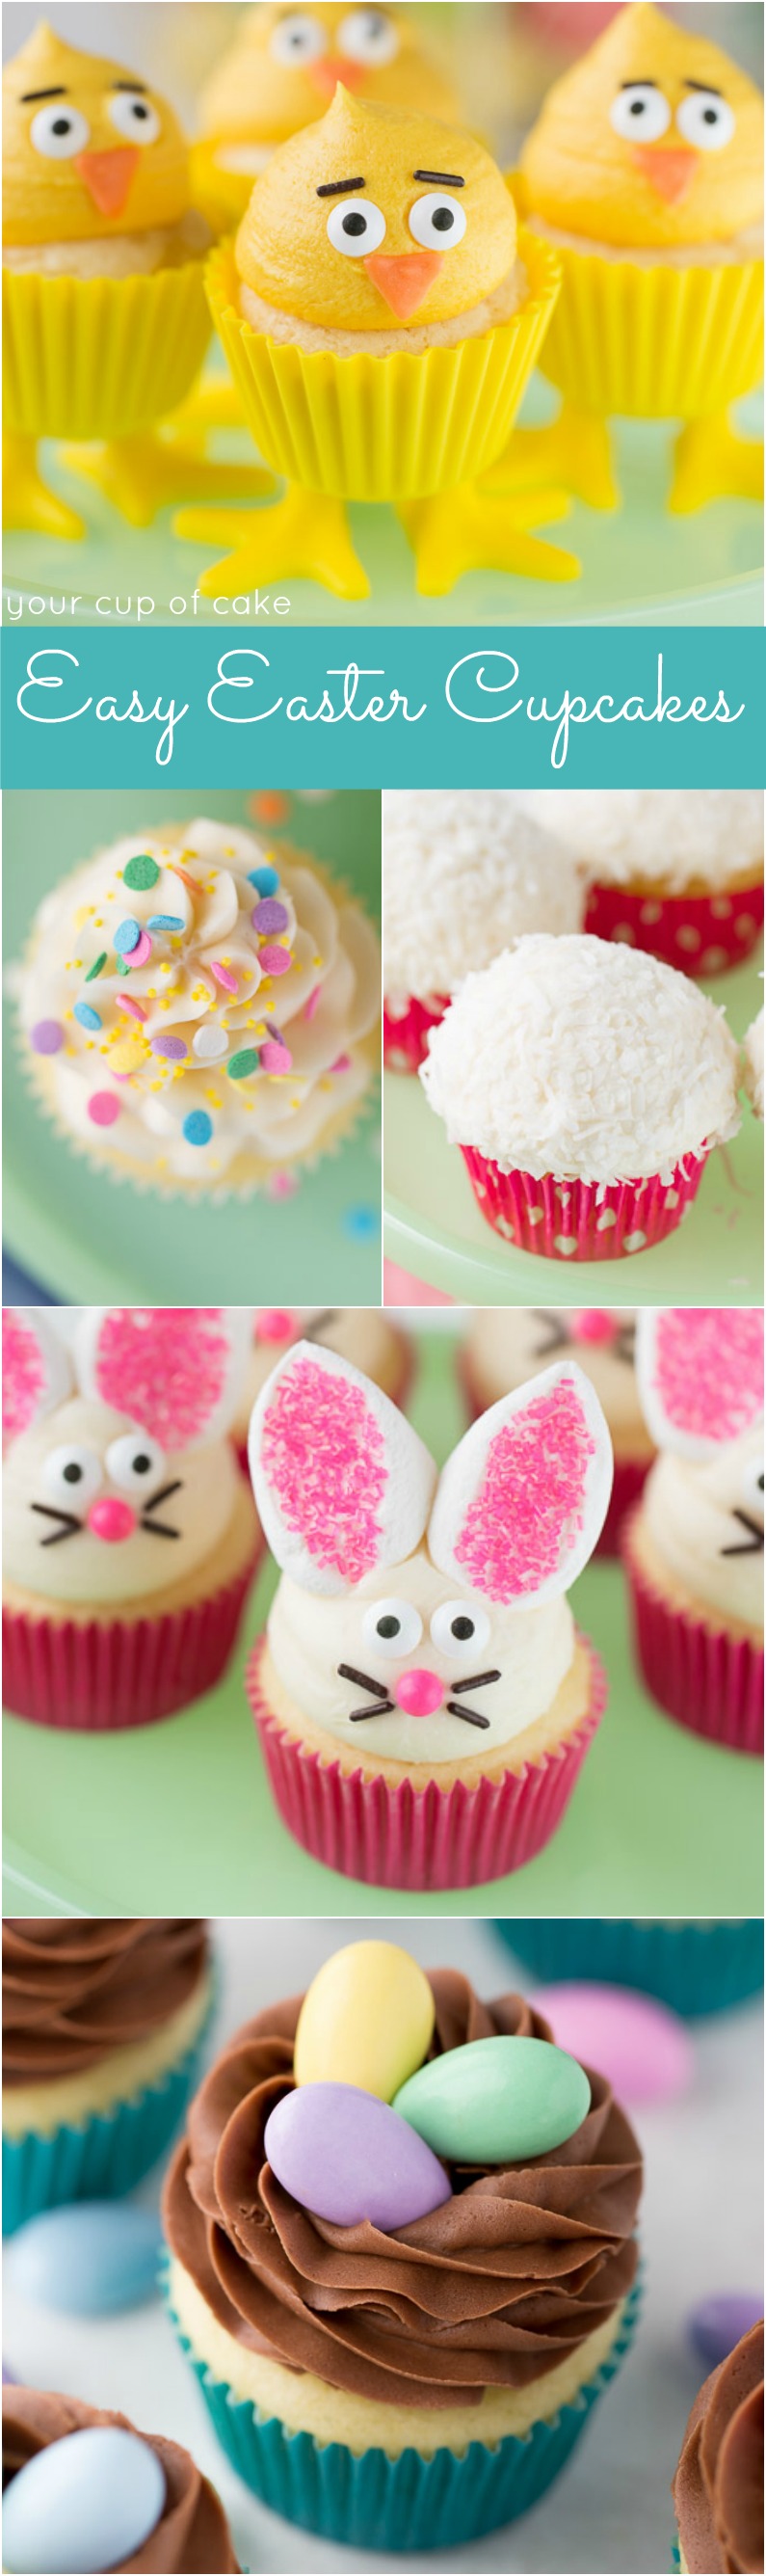 cute easy cupcakes decorating ideas